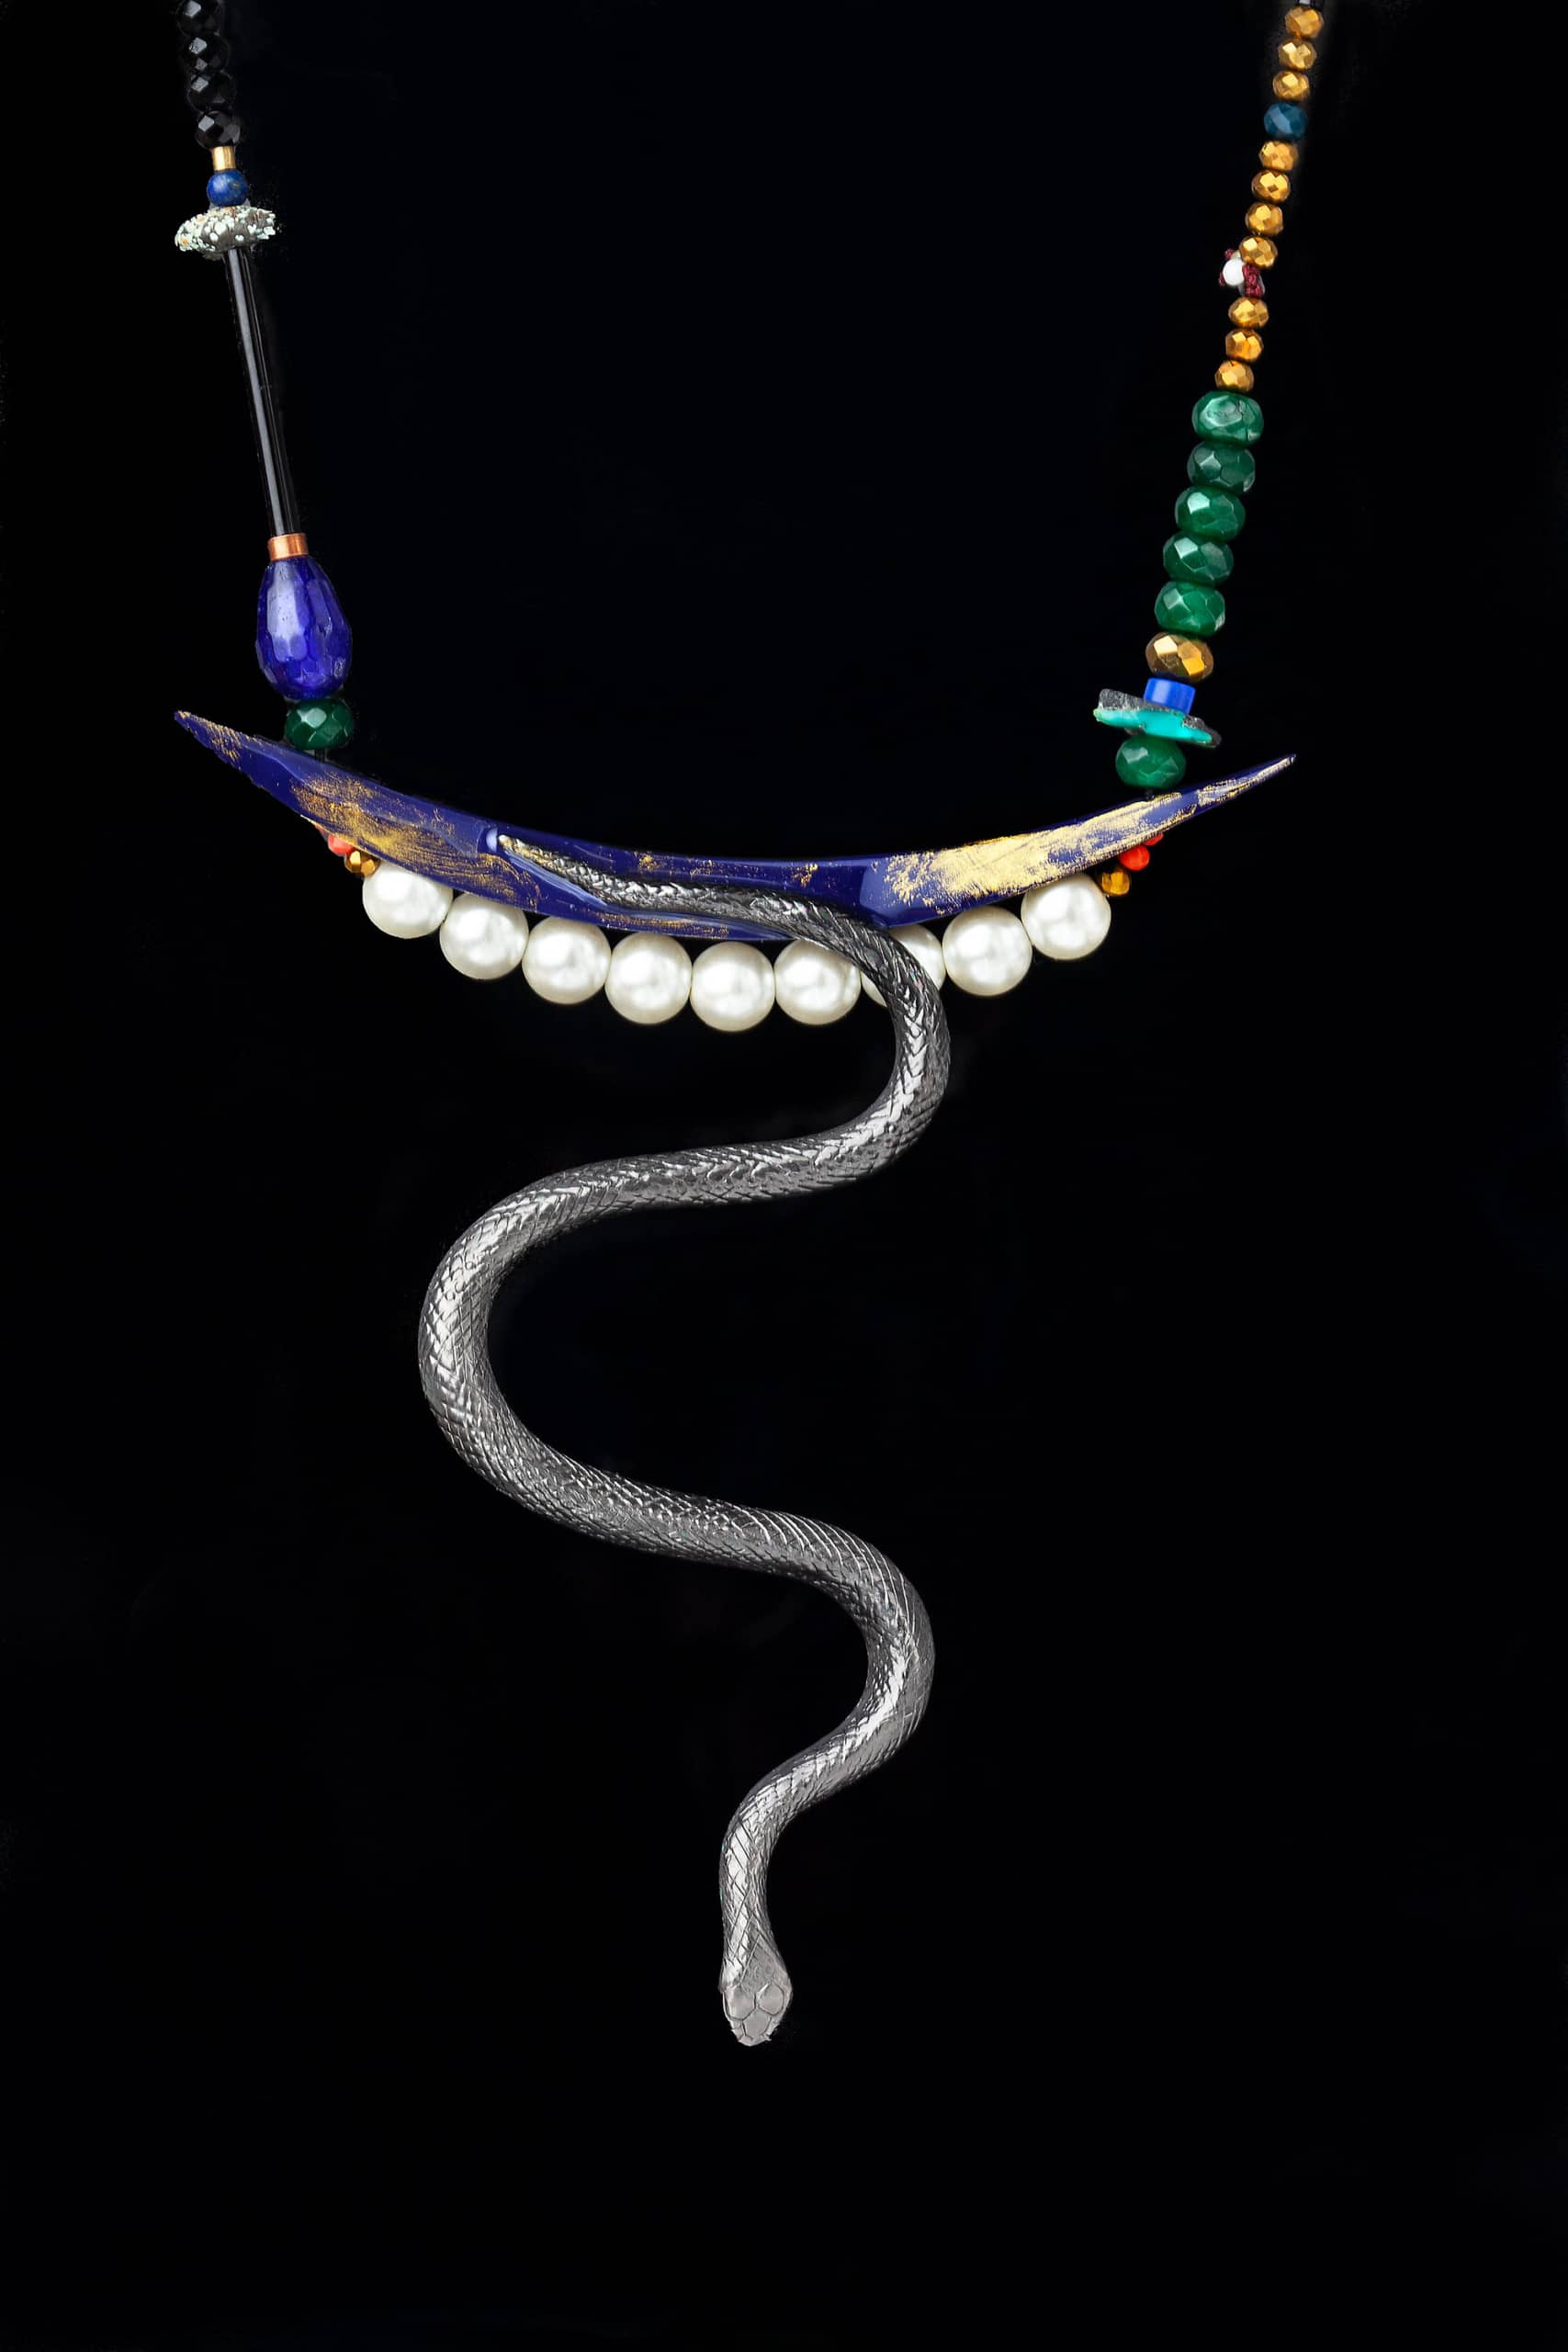 Snake black bronze necklace with enamel details main